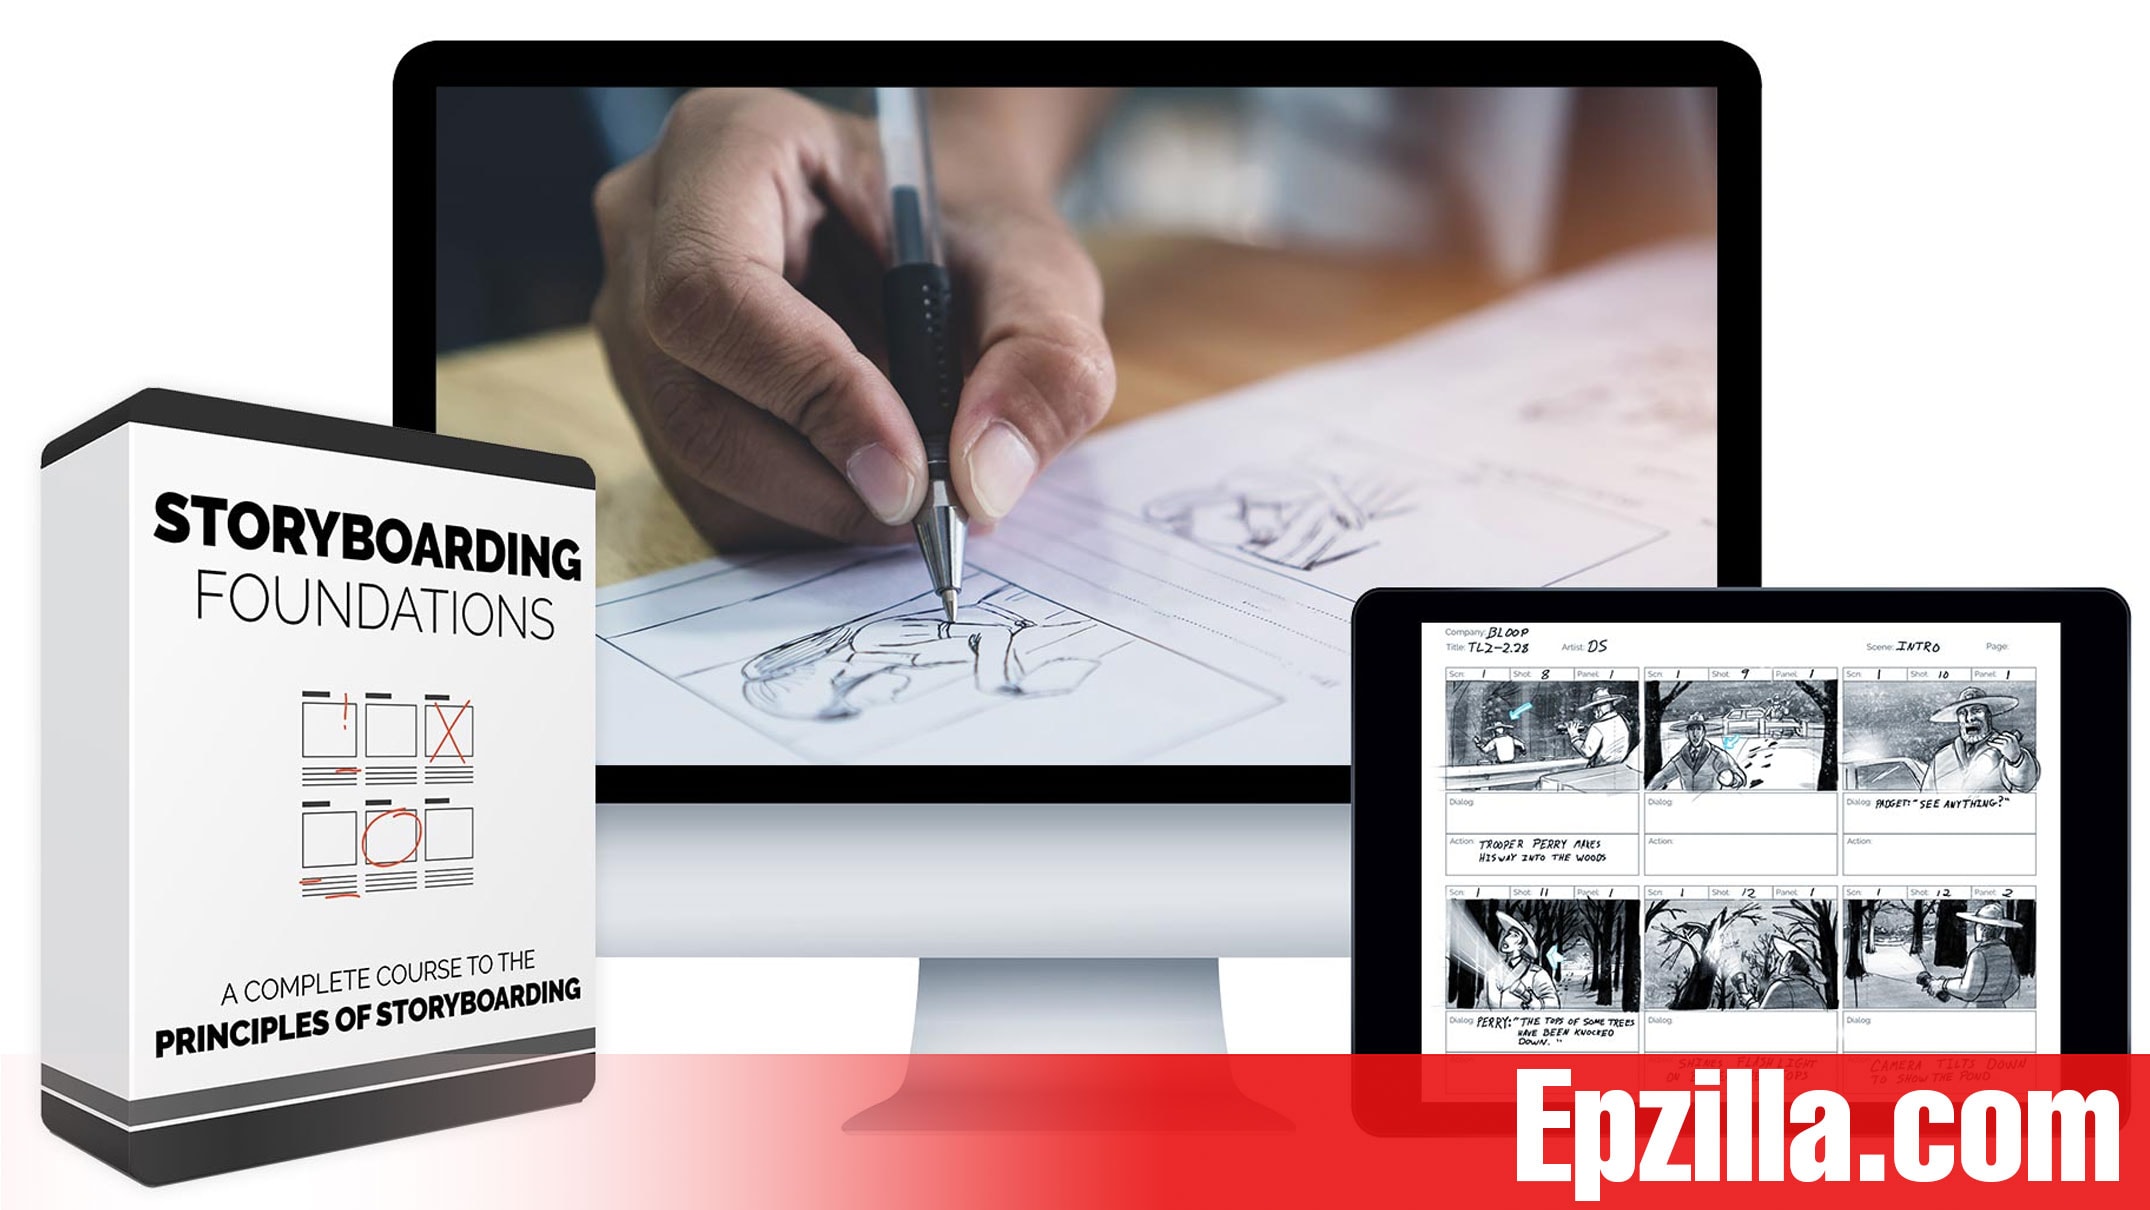 Bloop Animations Storyboarding Foundations Free Download Epzilla.com